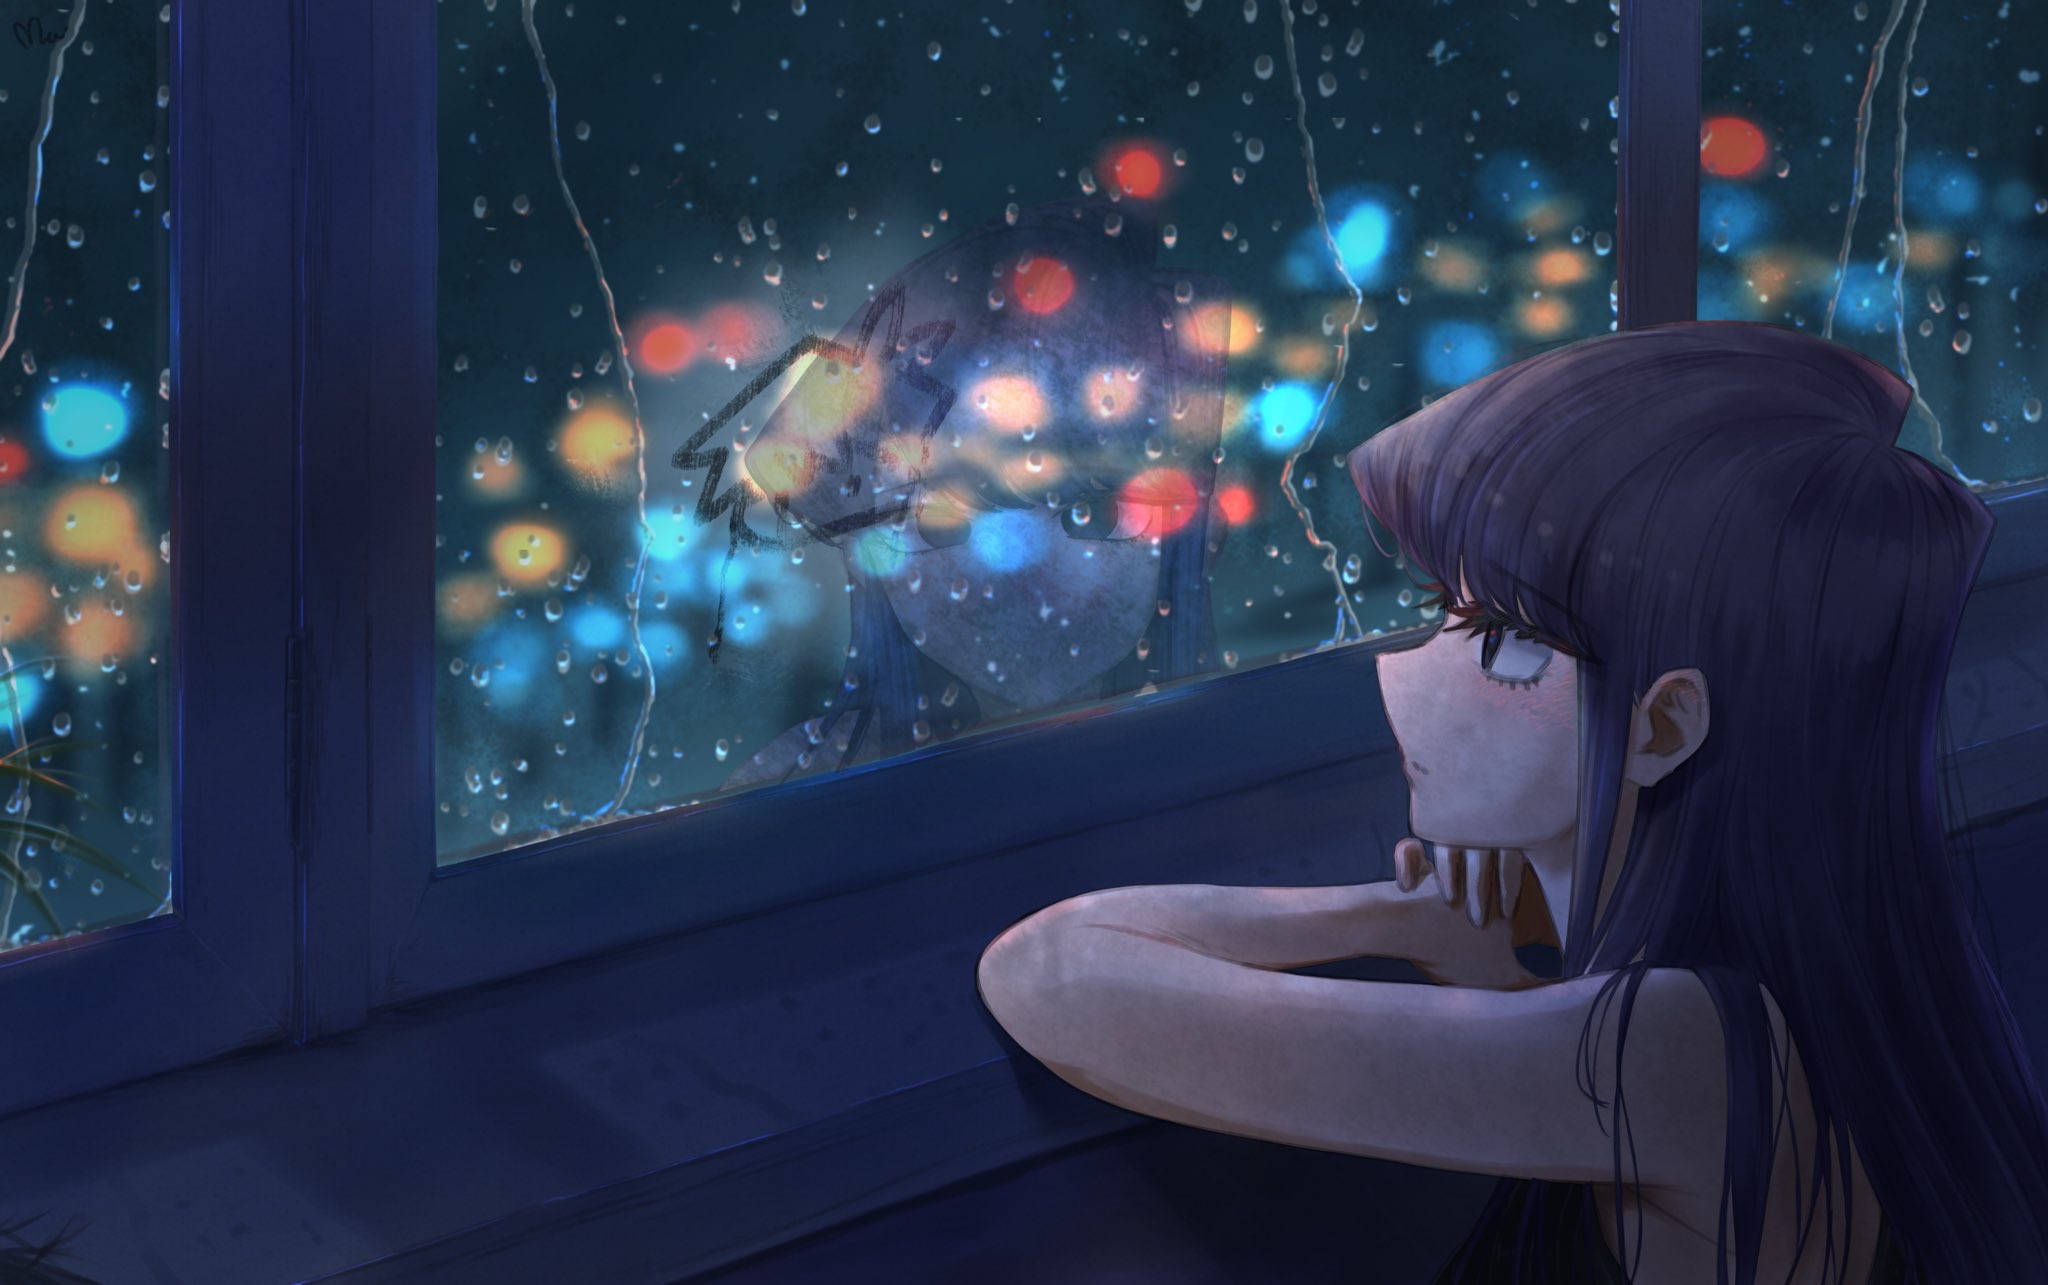 Anime Pige Komi Shouko stirrer på Regnvindue Wallpaper